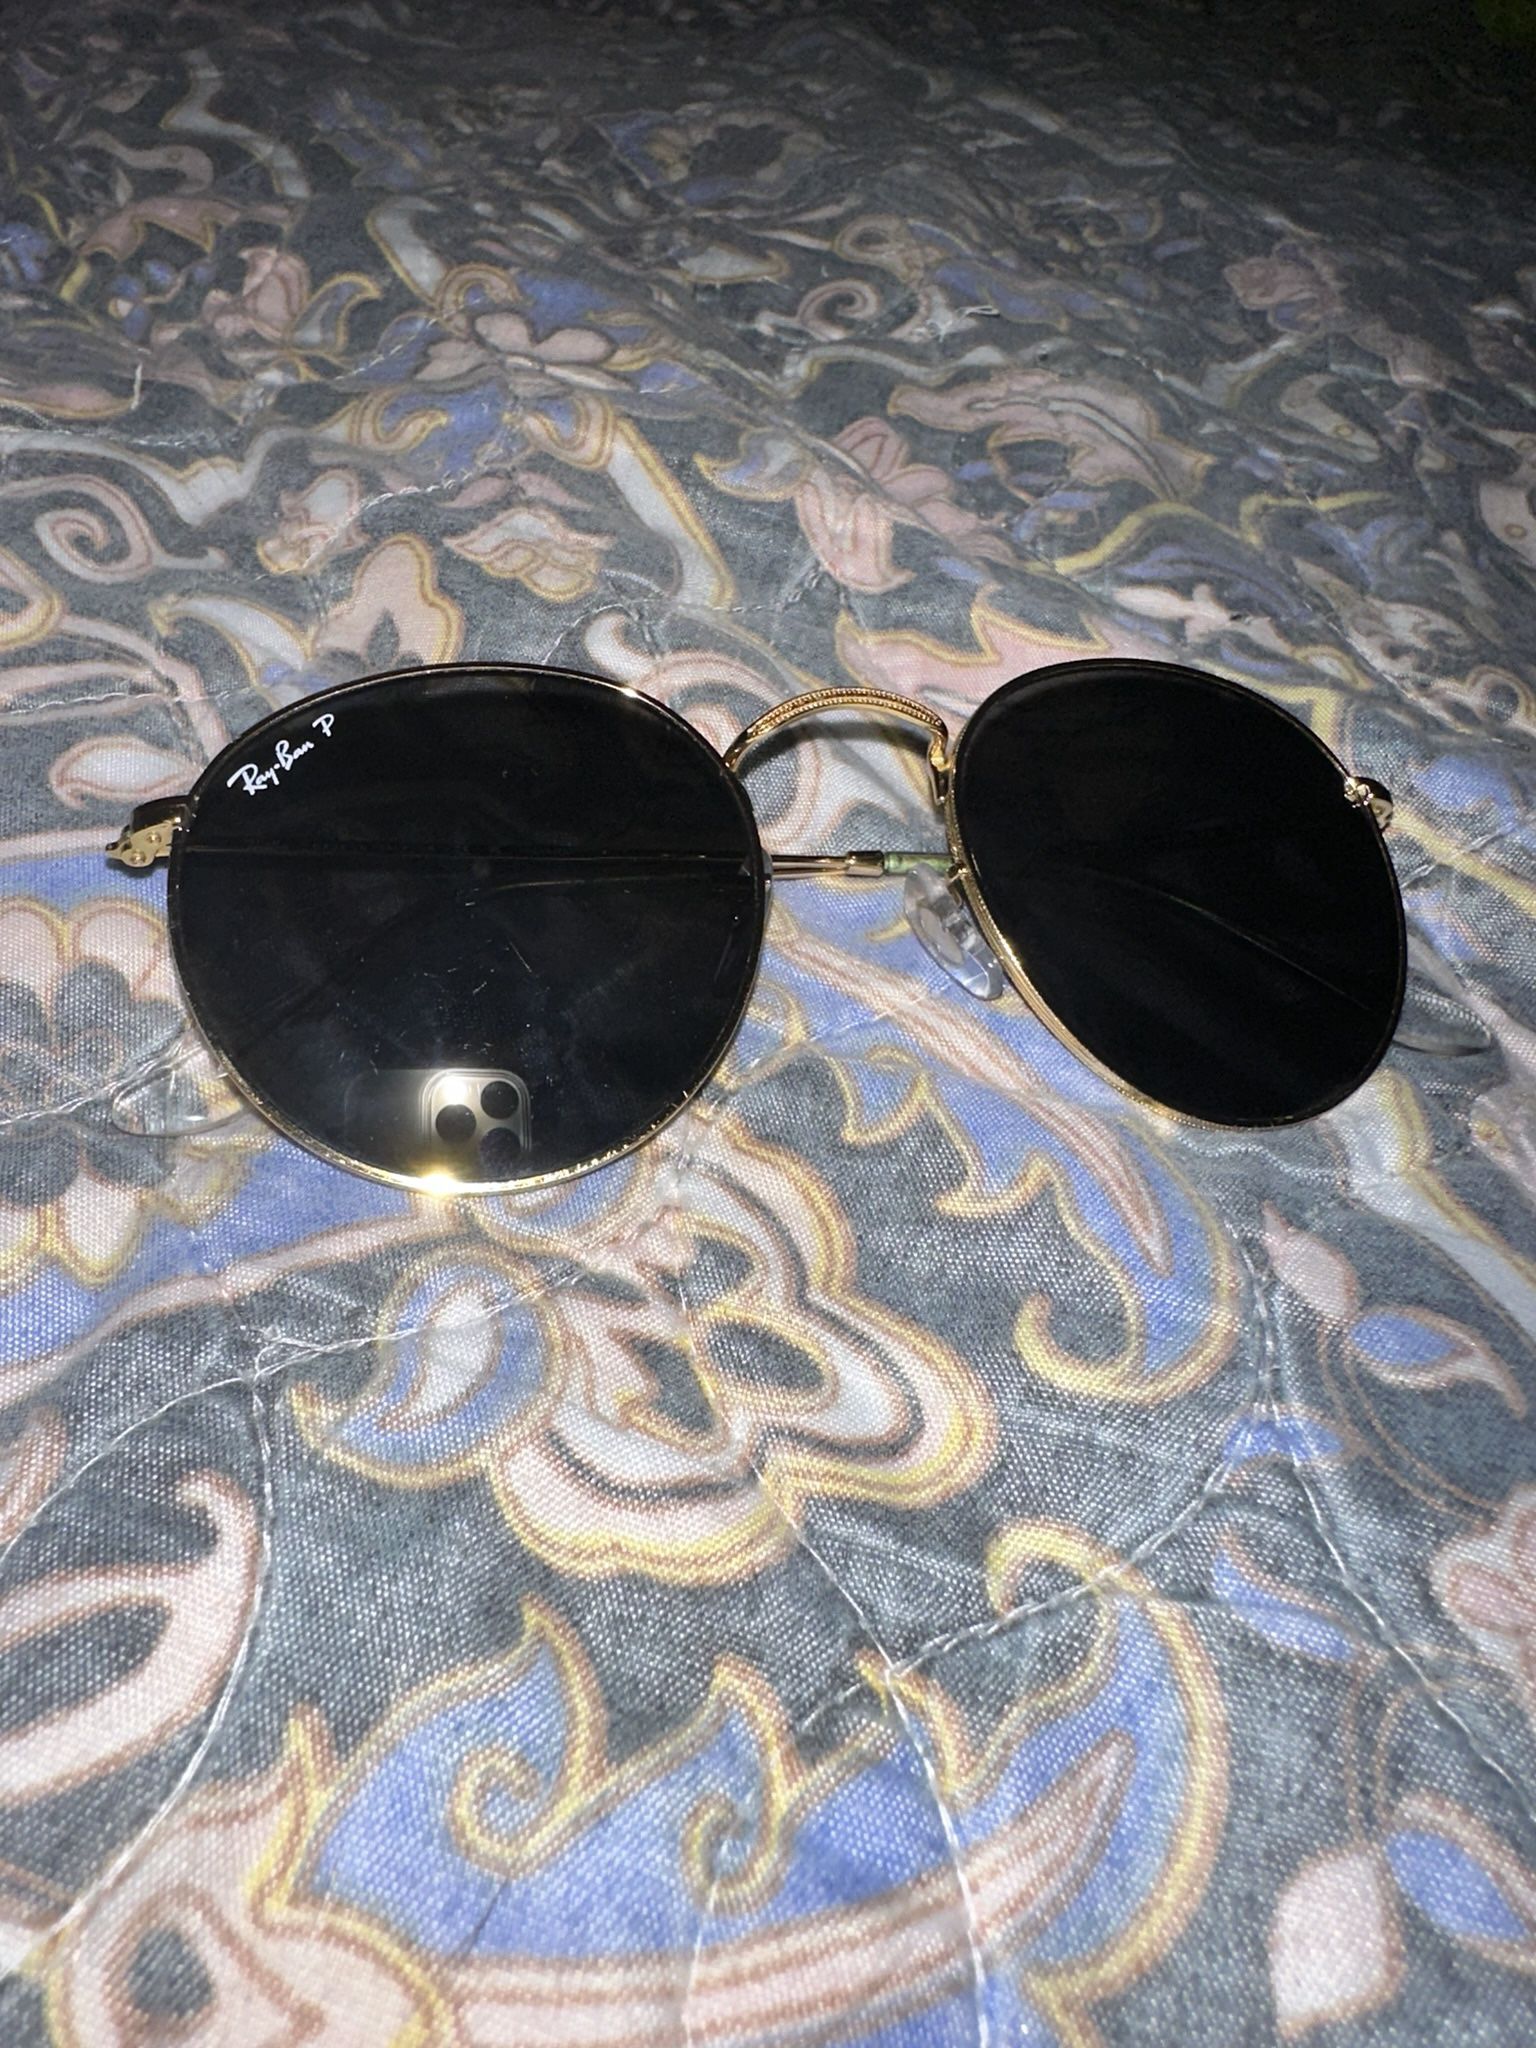 CHANEL Sunglasses for sale in Arlington, Texas